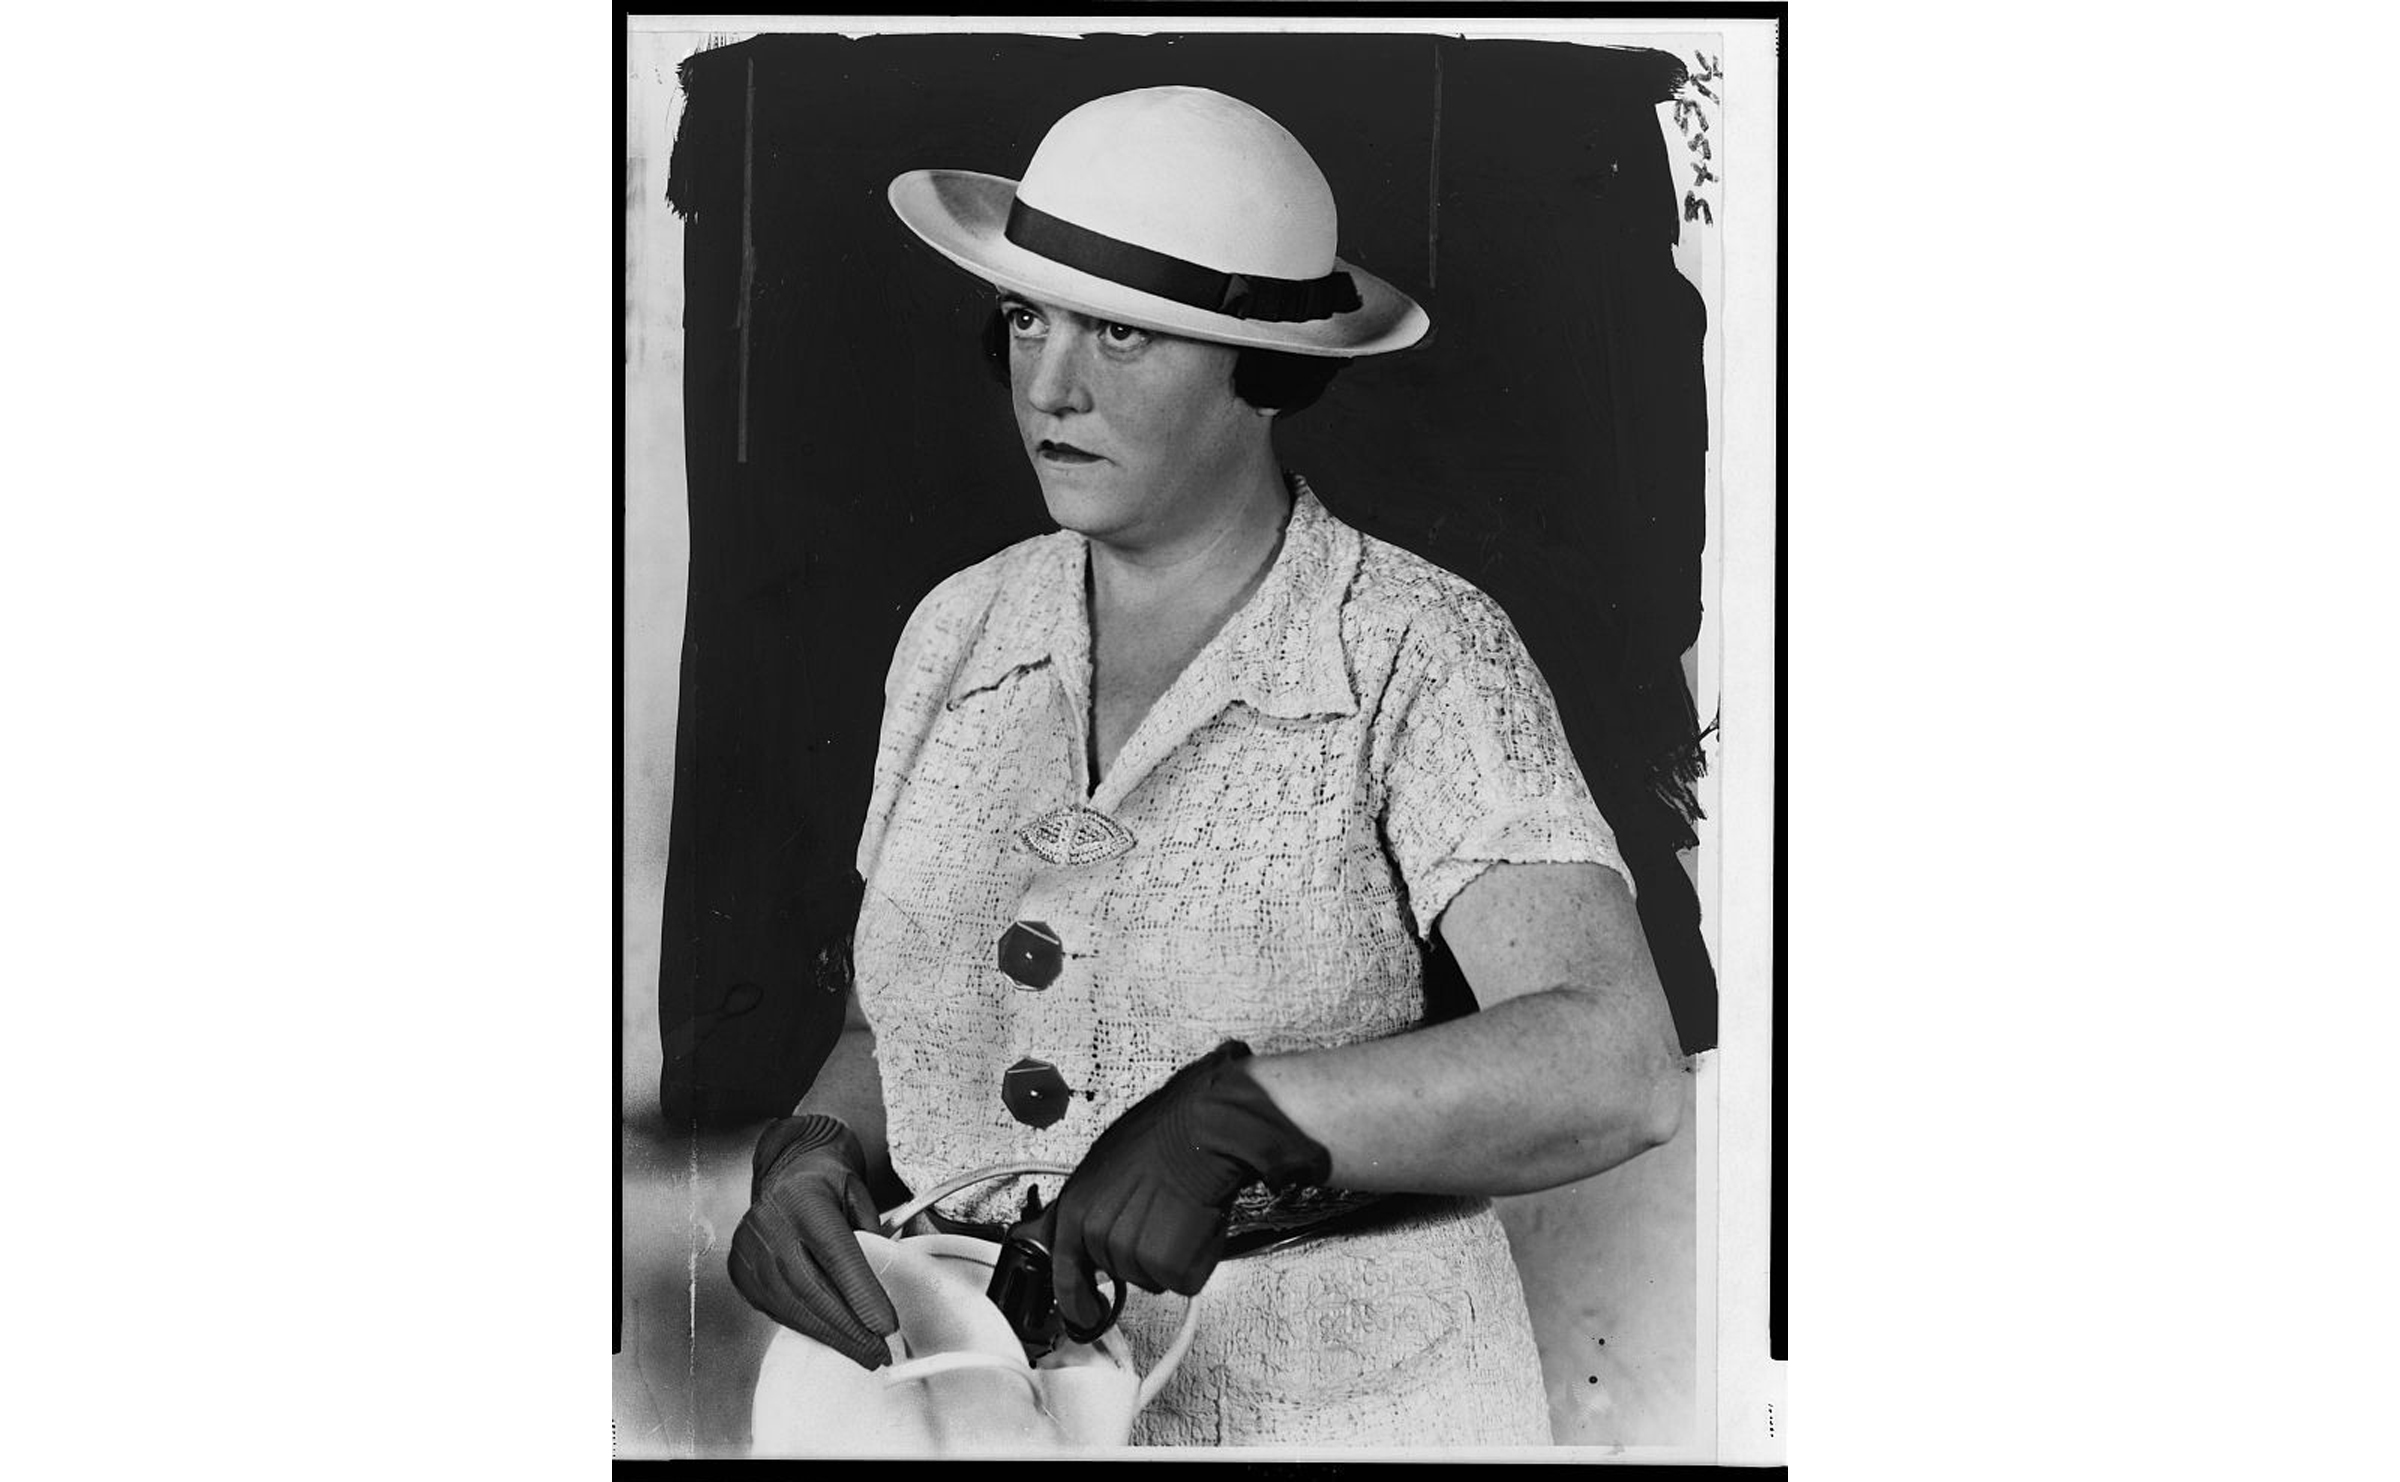 Shanley pulling a pistol from her handbag, 1937. Photo: Library of Congress.